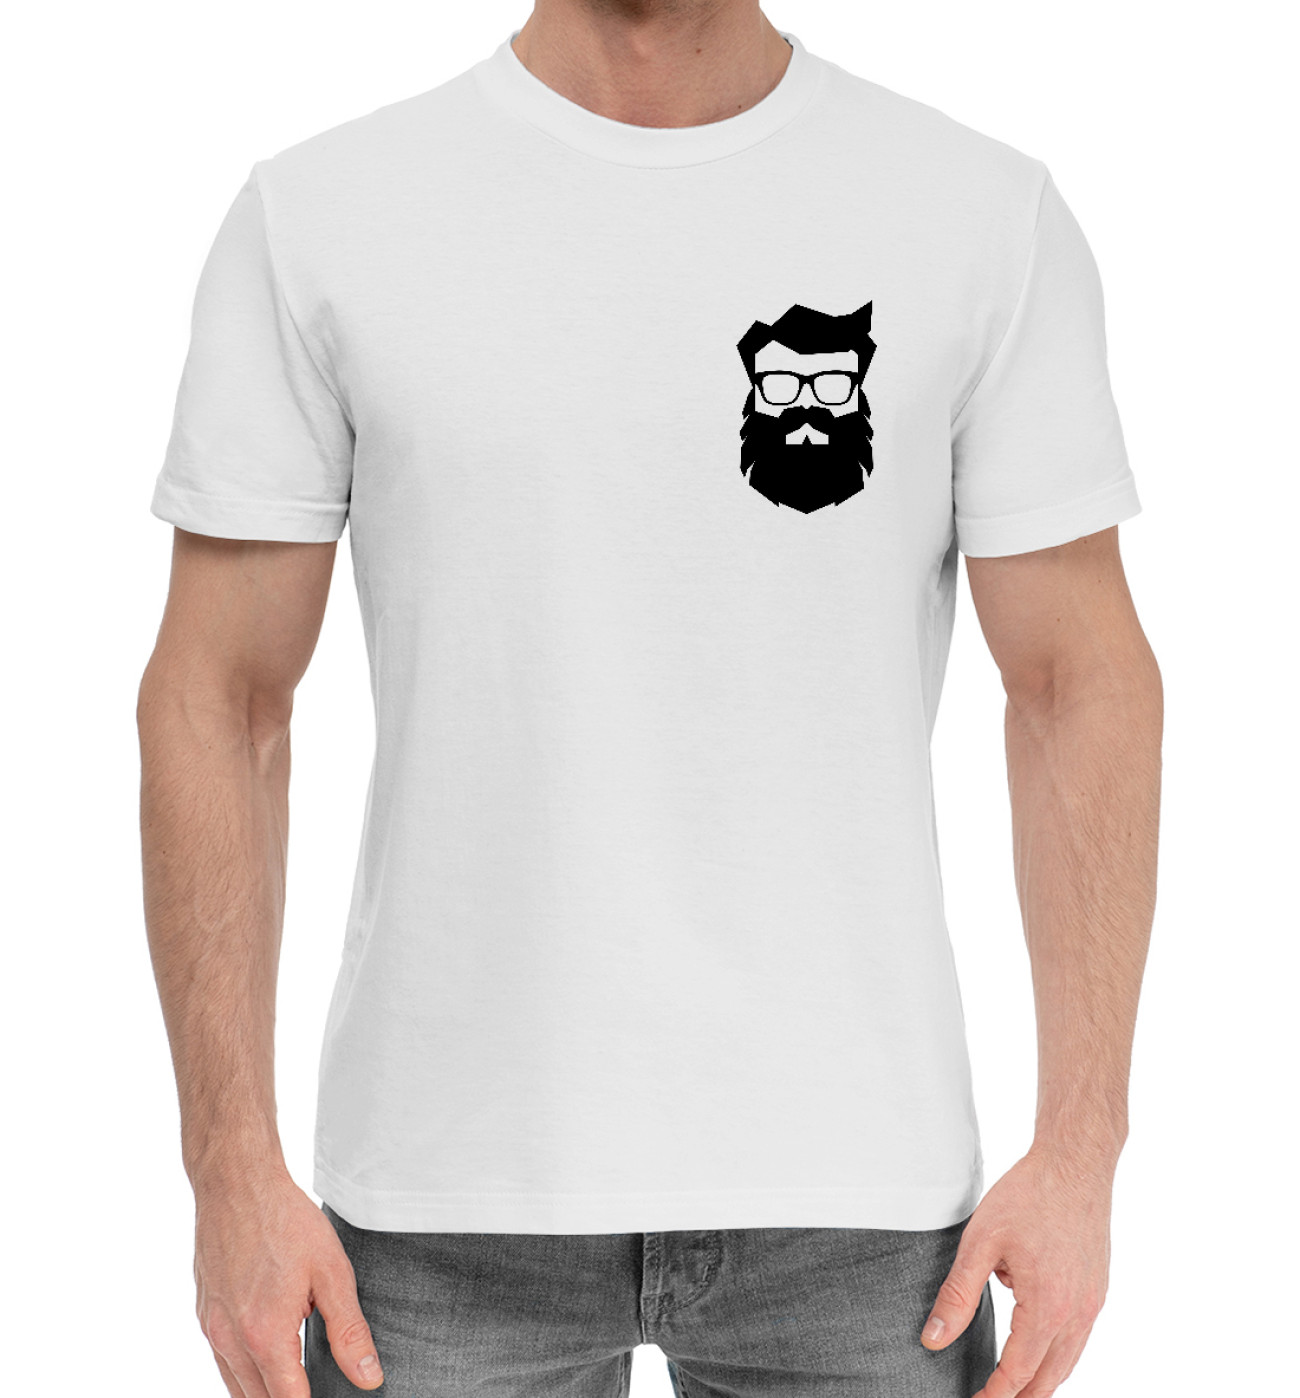 Мужская Хлопковая футболка Santa Claus - Cool Hipster, артикул: DMZ-676747-hfu-2